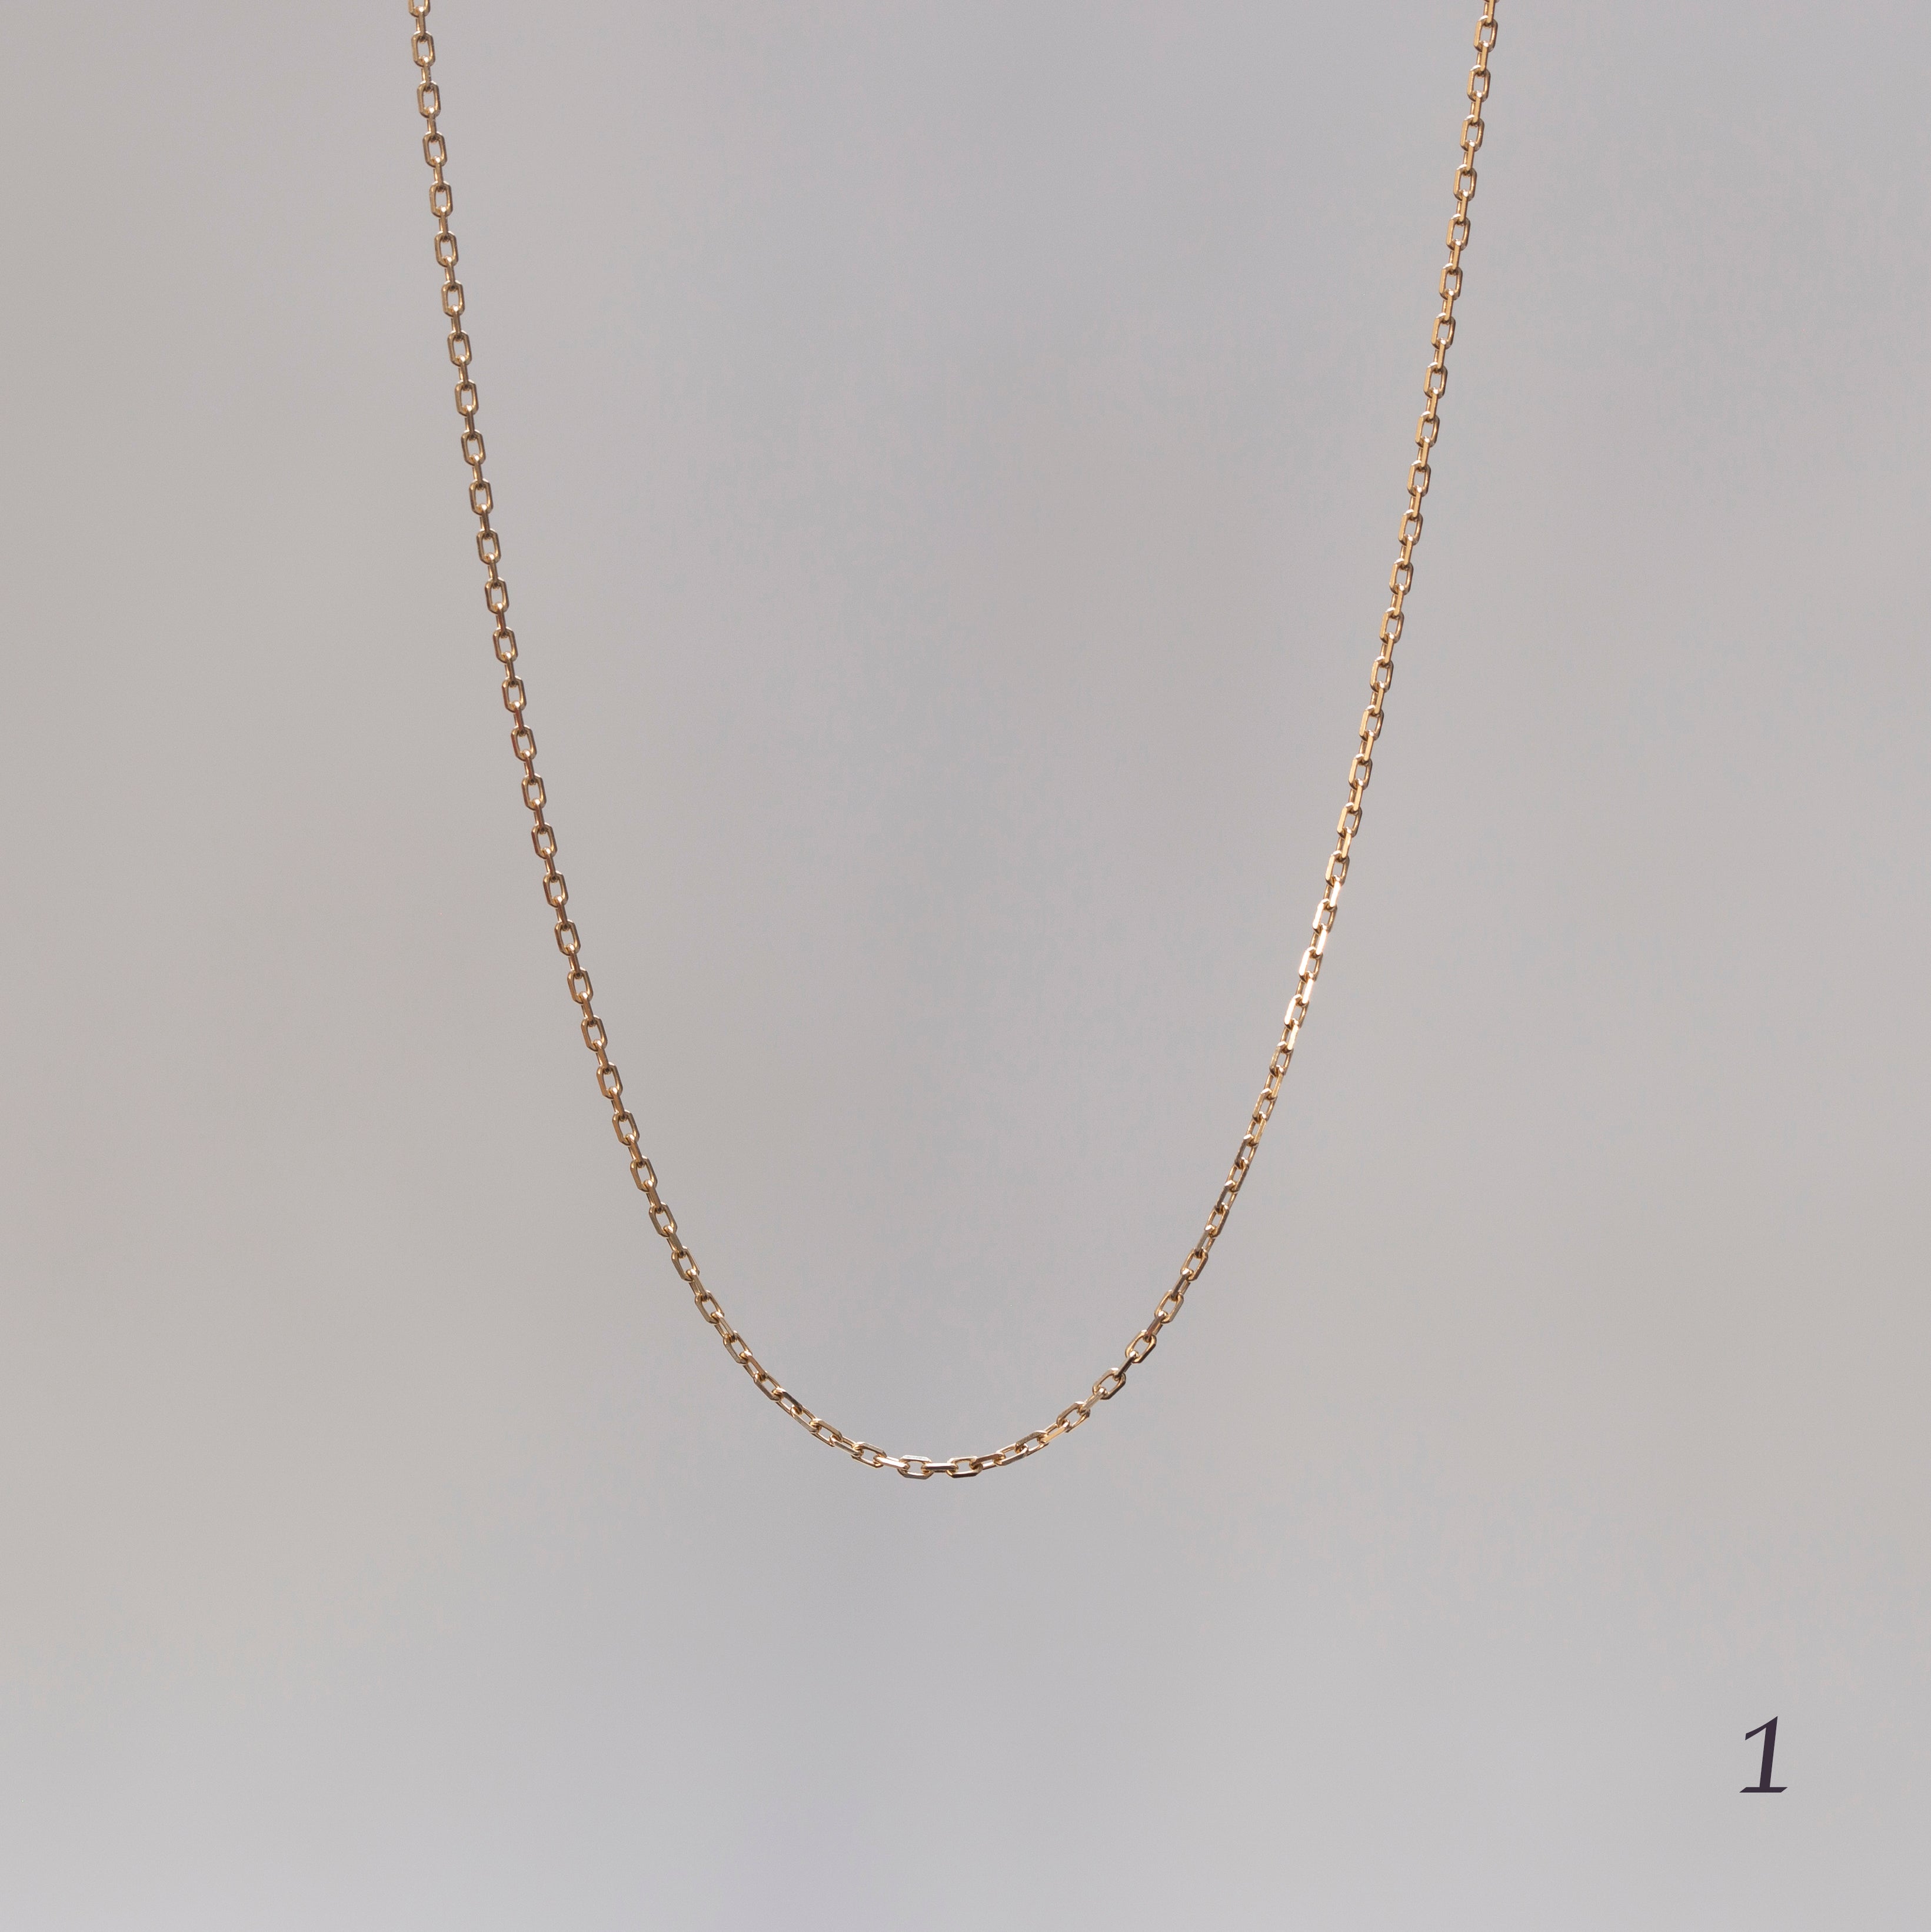 9ct Gold Chains - felt